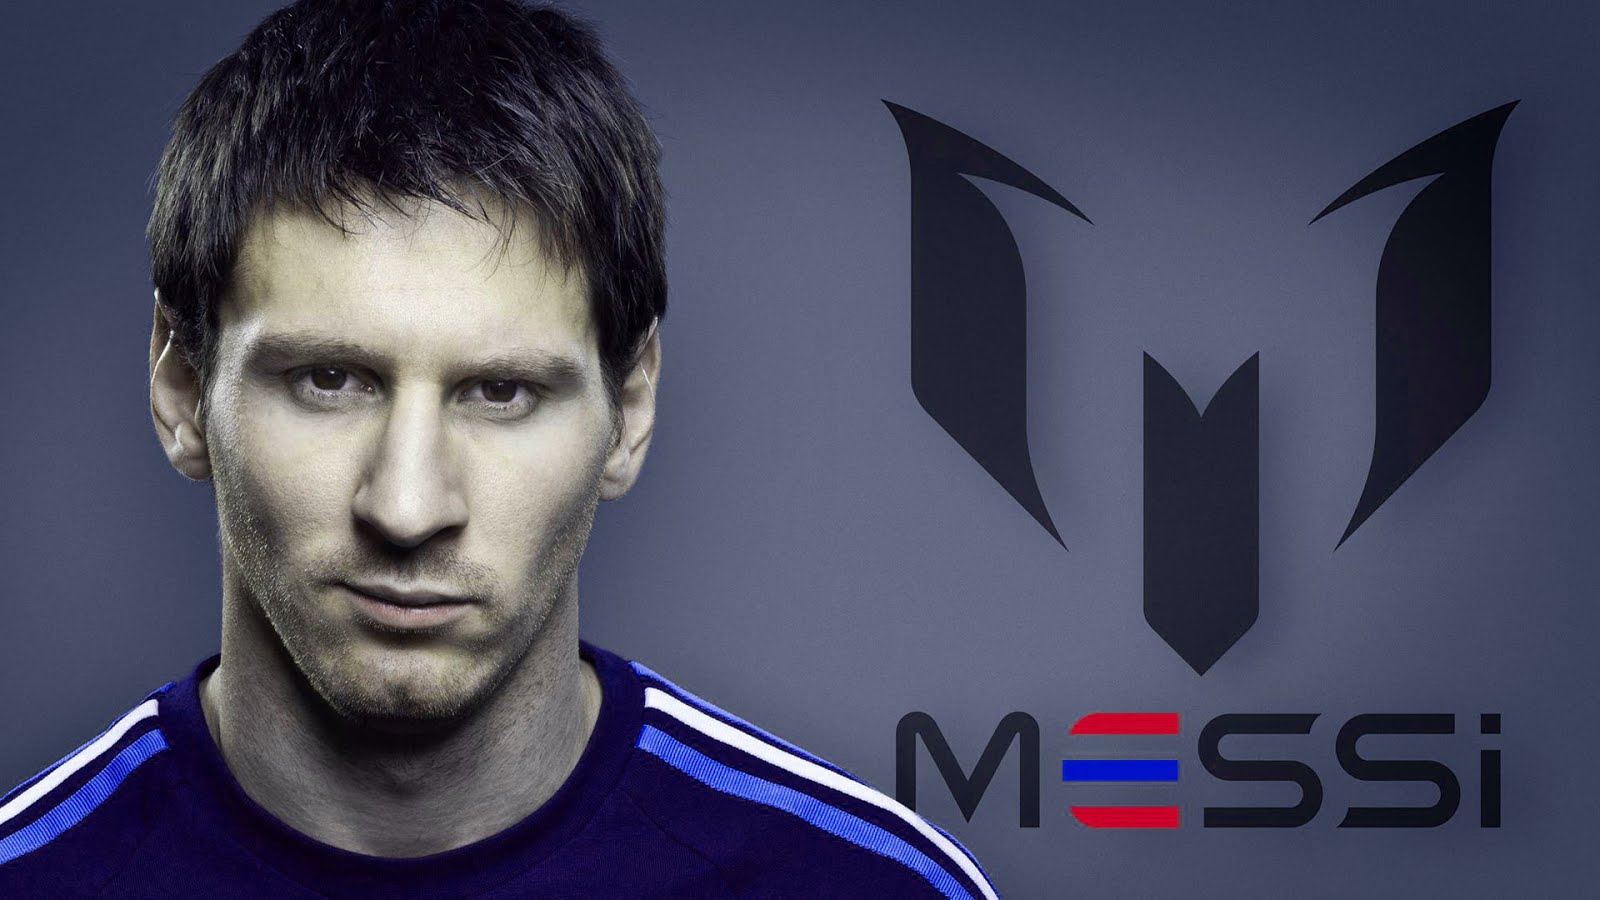 Lionel Messi - More than a legend 